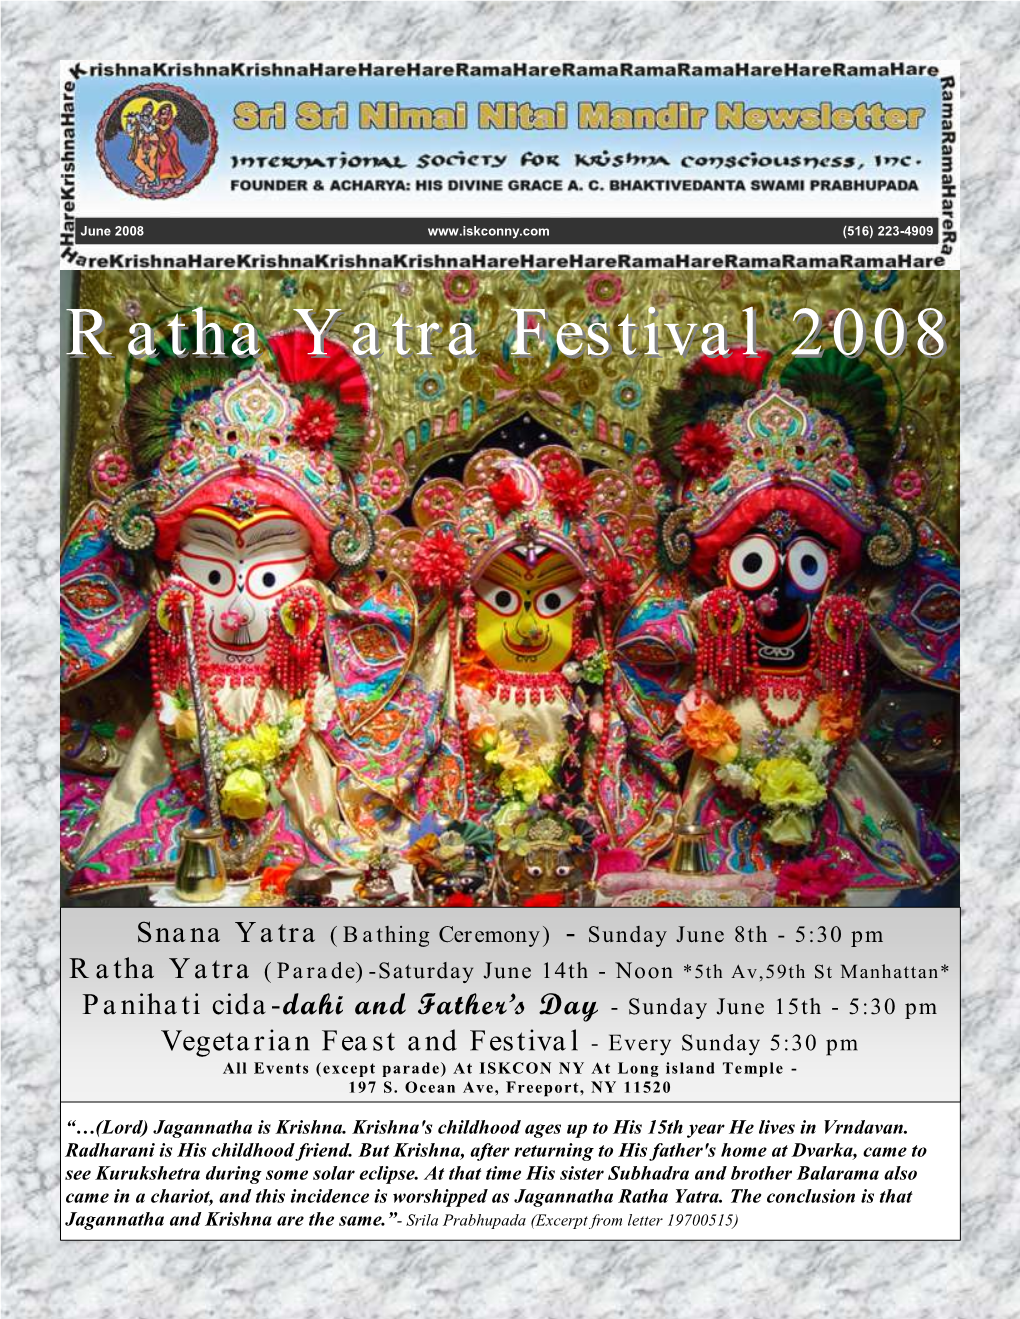 Ratha Yatra Festival 2008